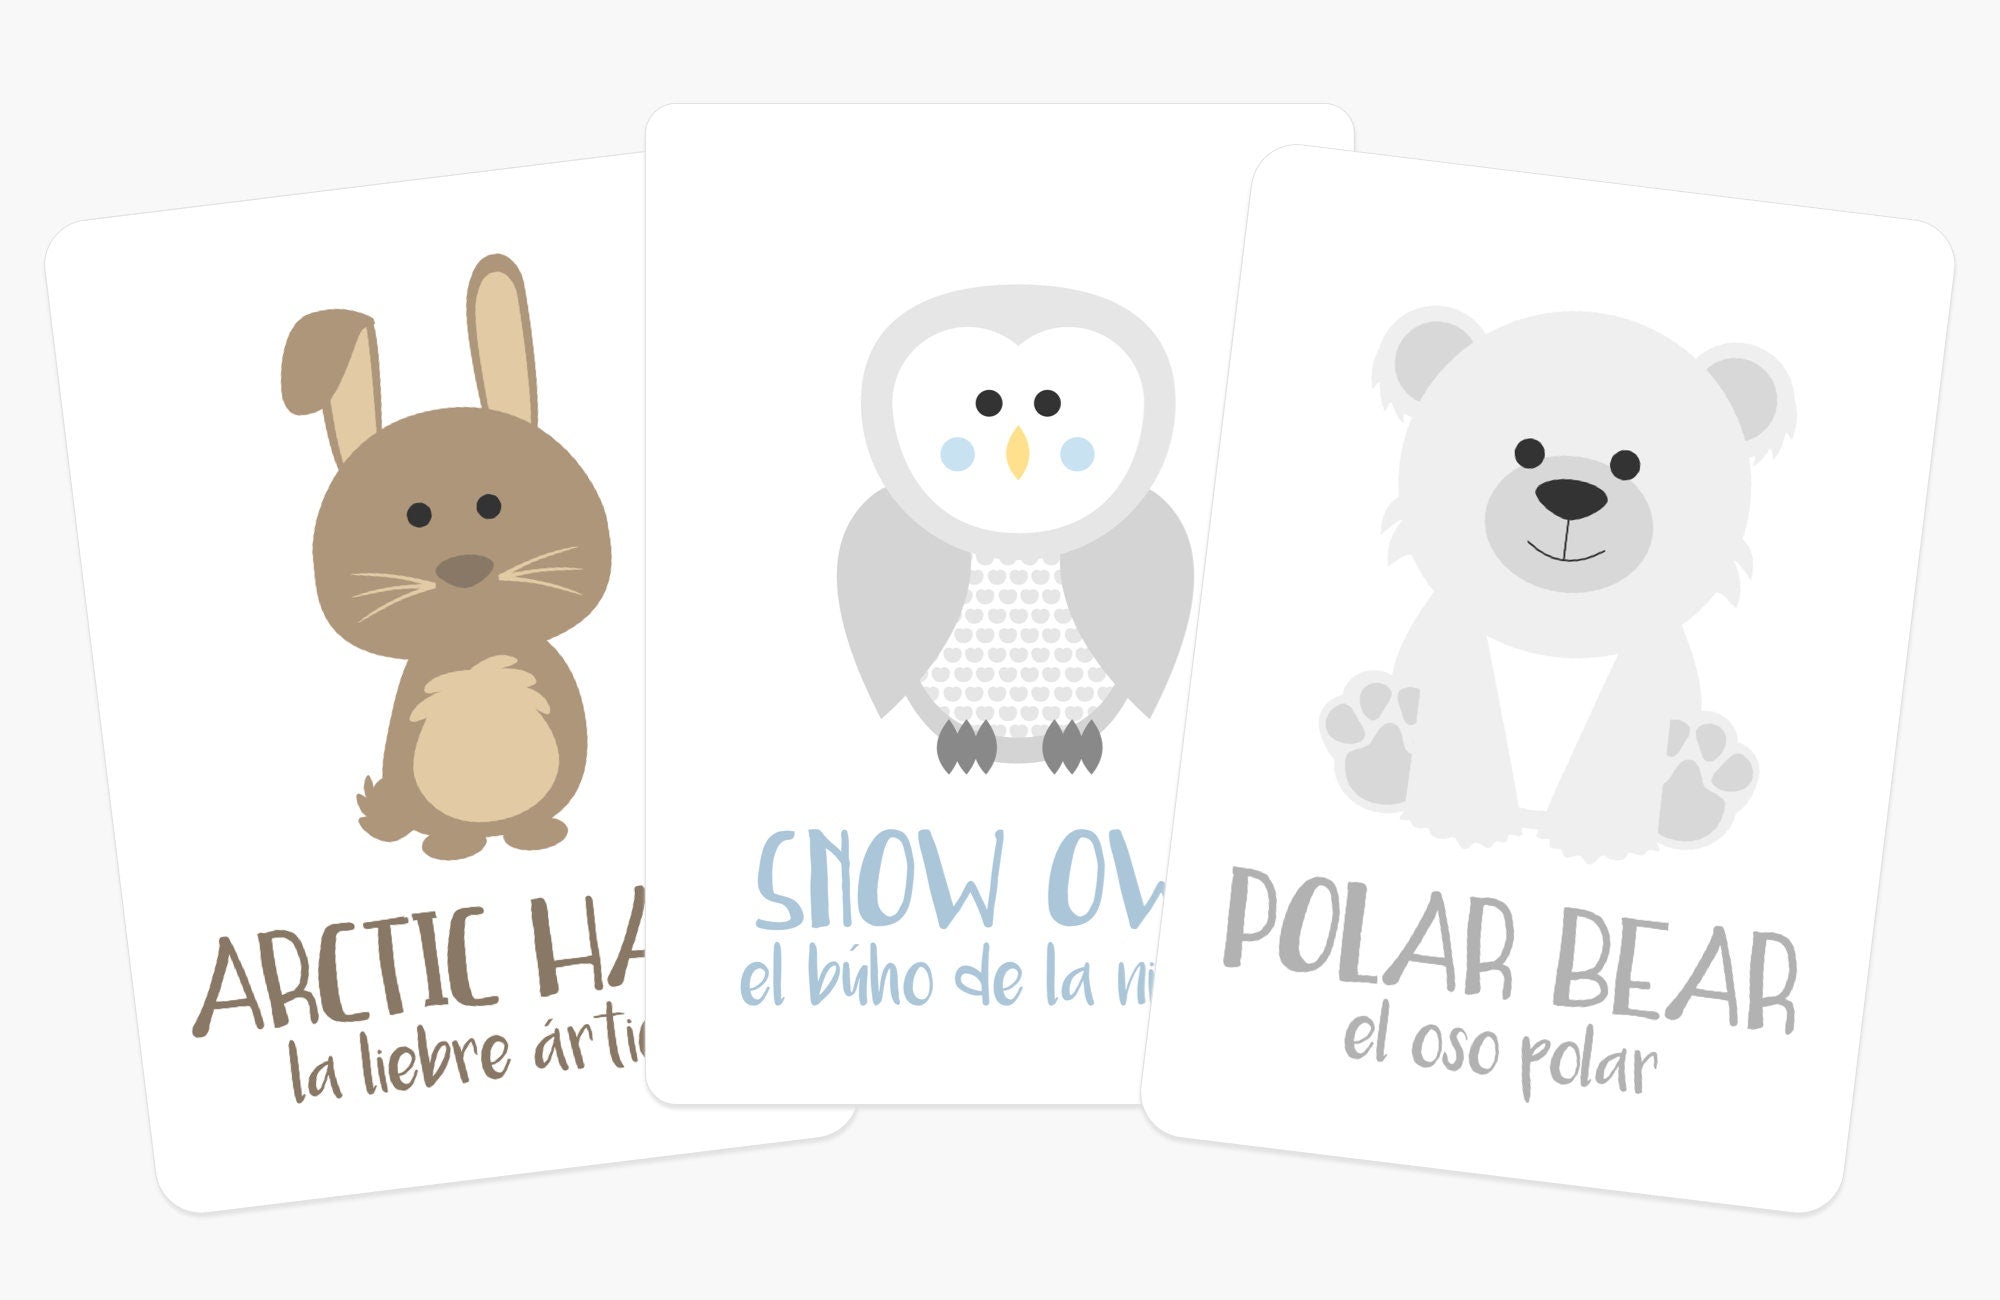 Arctic Animals  Polar animals preschool, Arctic animals preschool, Animal  flashcards